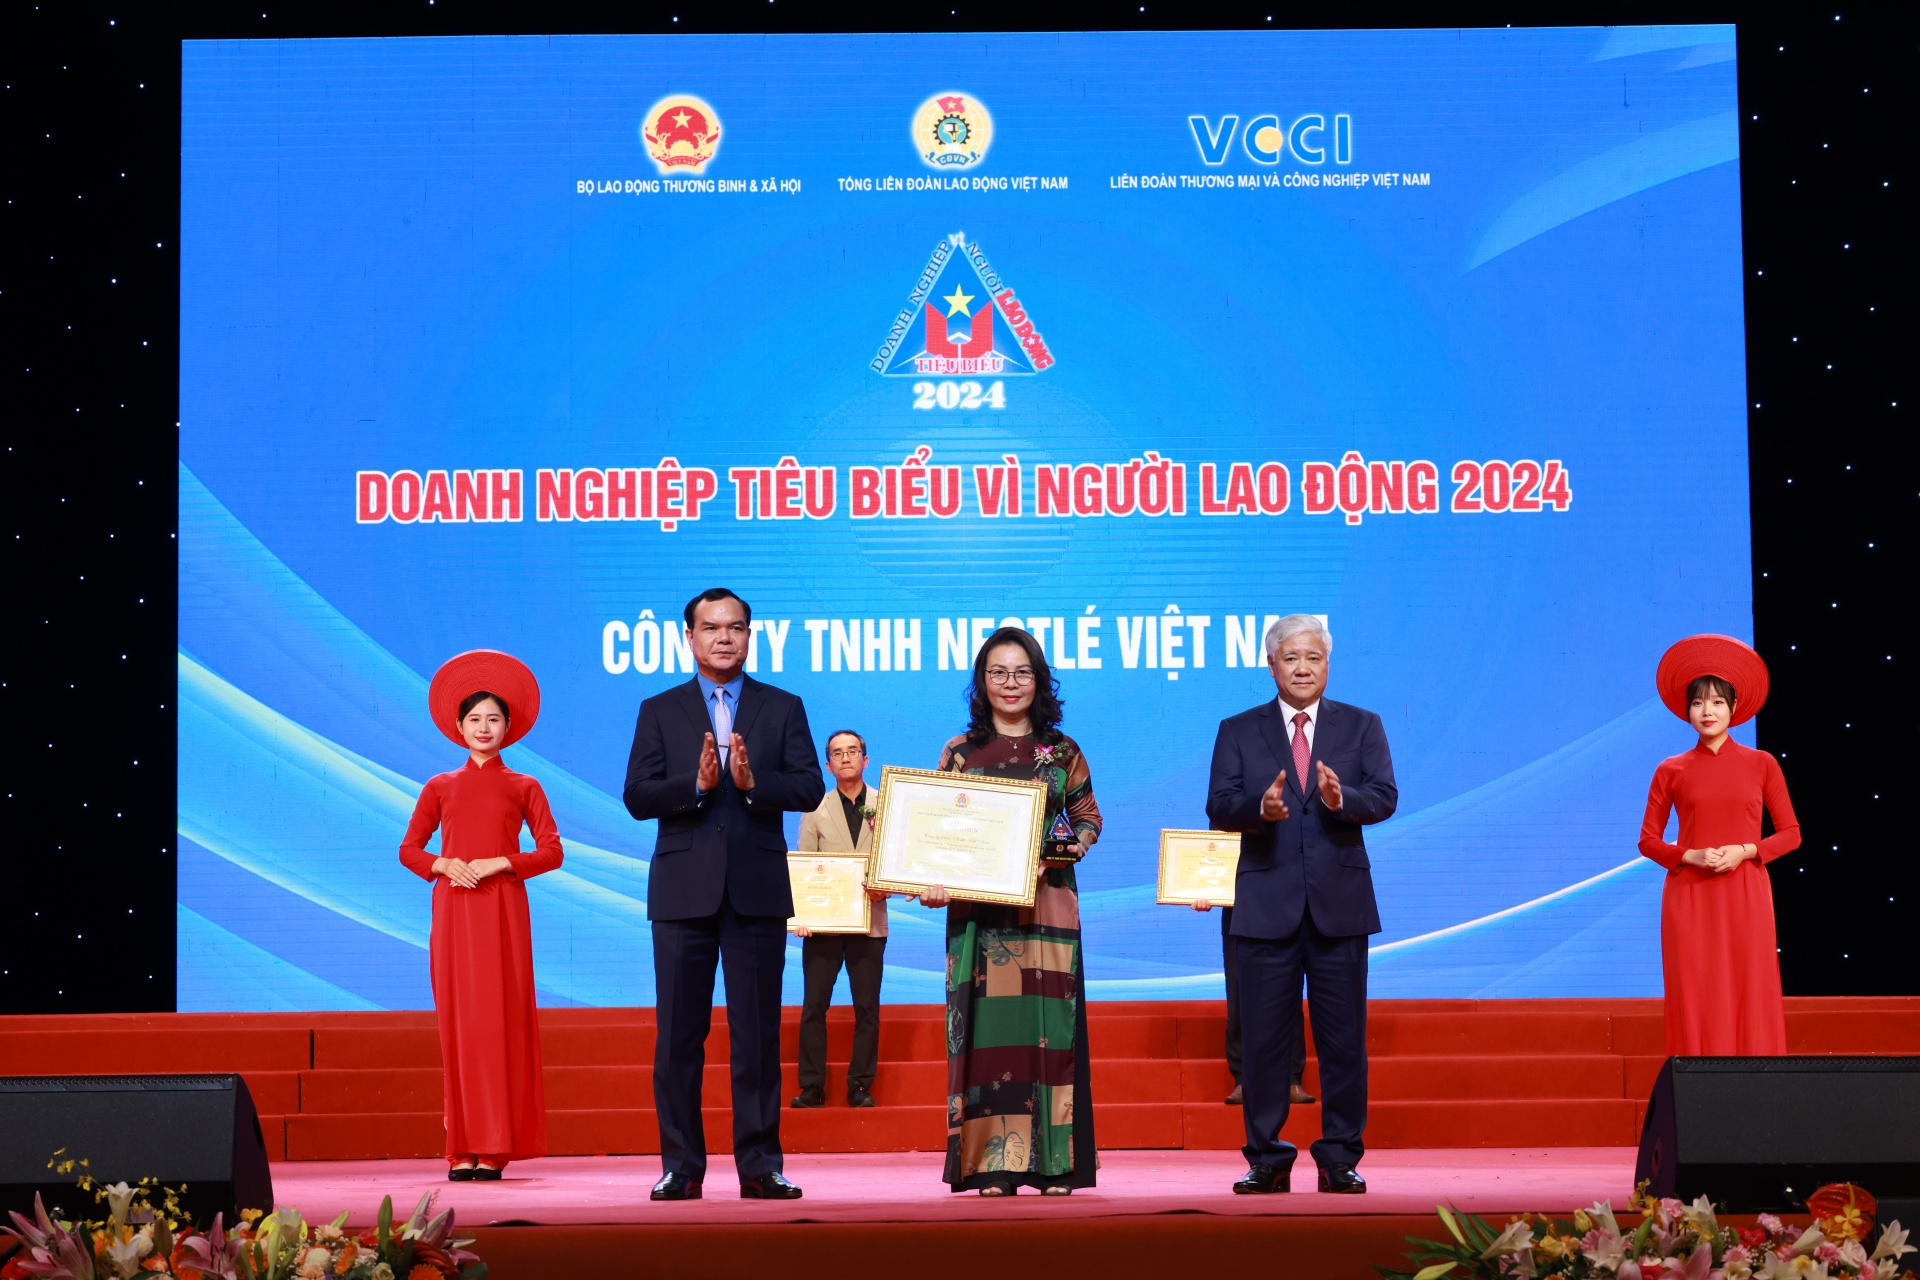 Nestlé Vietnam recognised for labour efforts in 2024